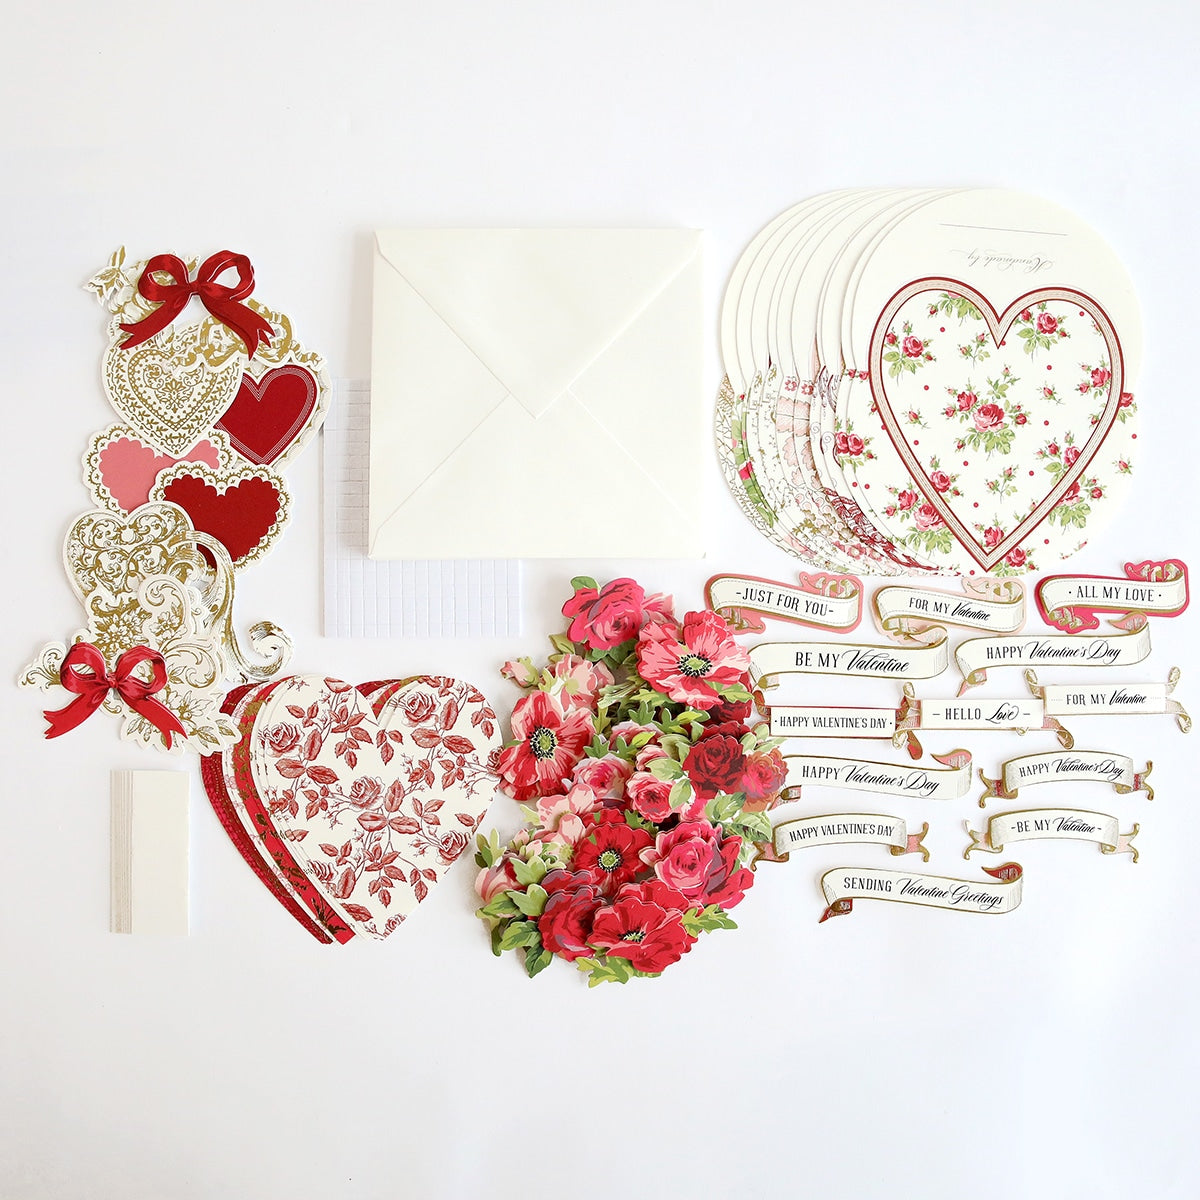 Hello Love | Hello Love Sticker | Valentine Sticker | Valentine's Day  Stickers | Valentine Stickers | Happy Valentine Stickers | Happy Valentines  Day